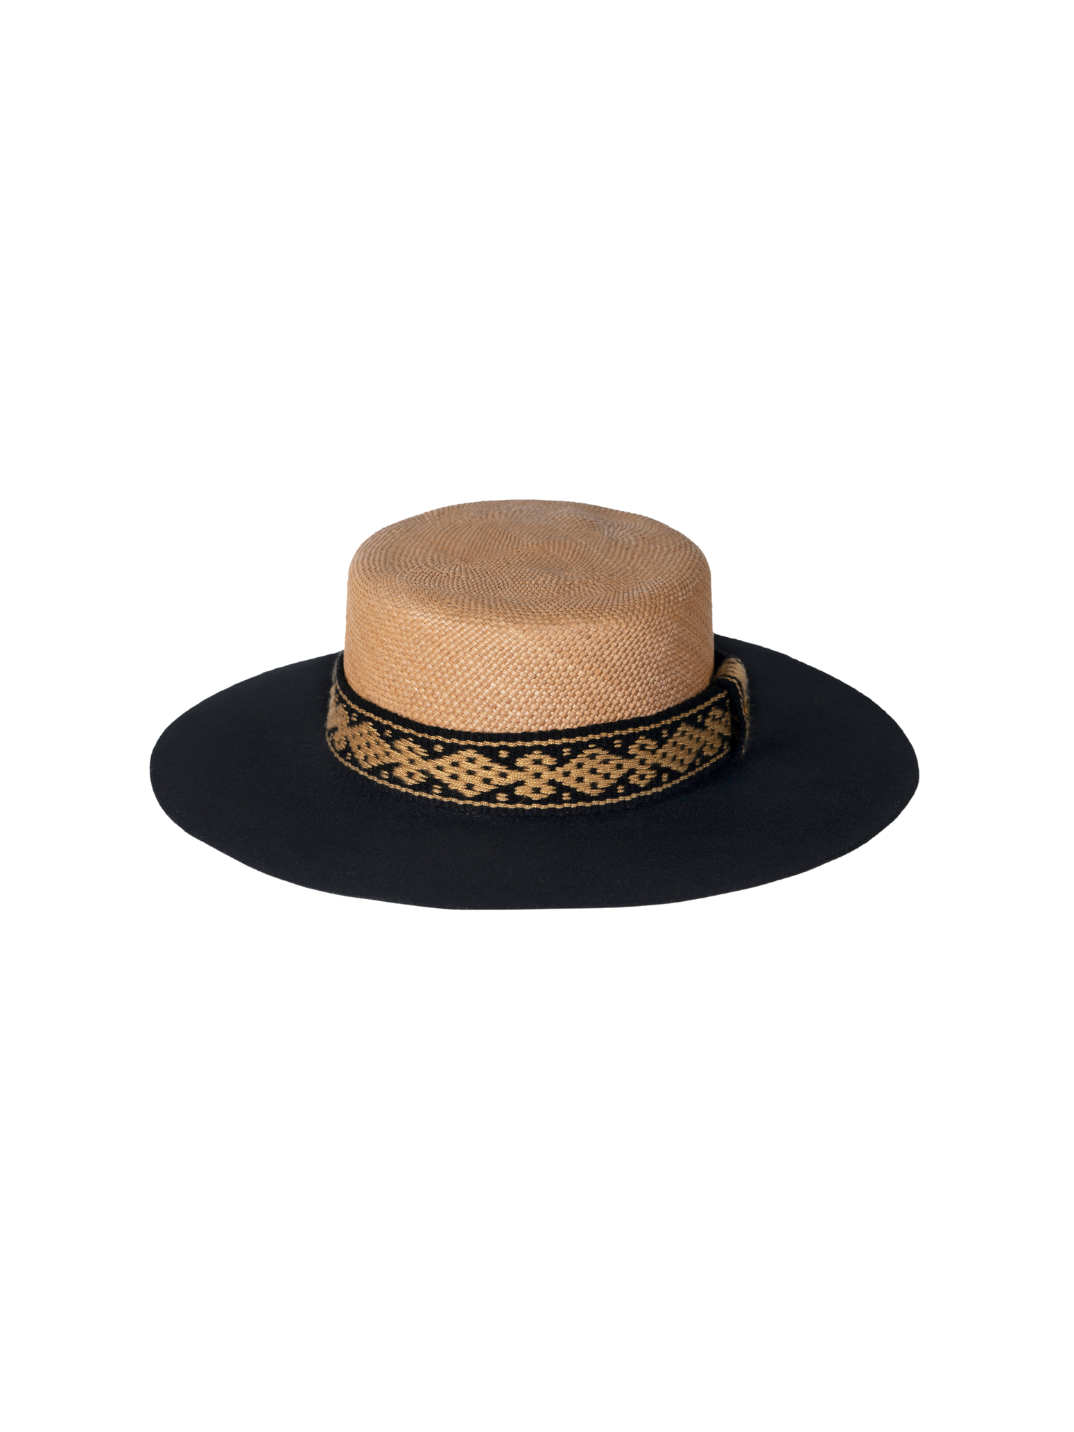 black felt & straw hat handmade in Columbia